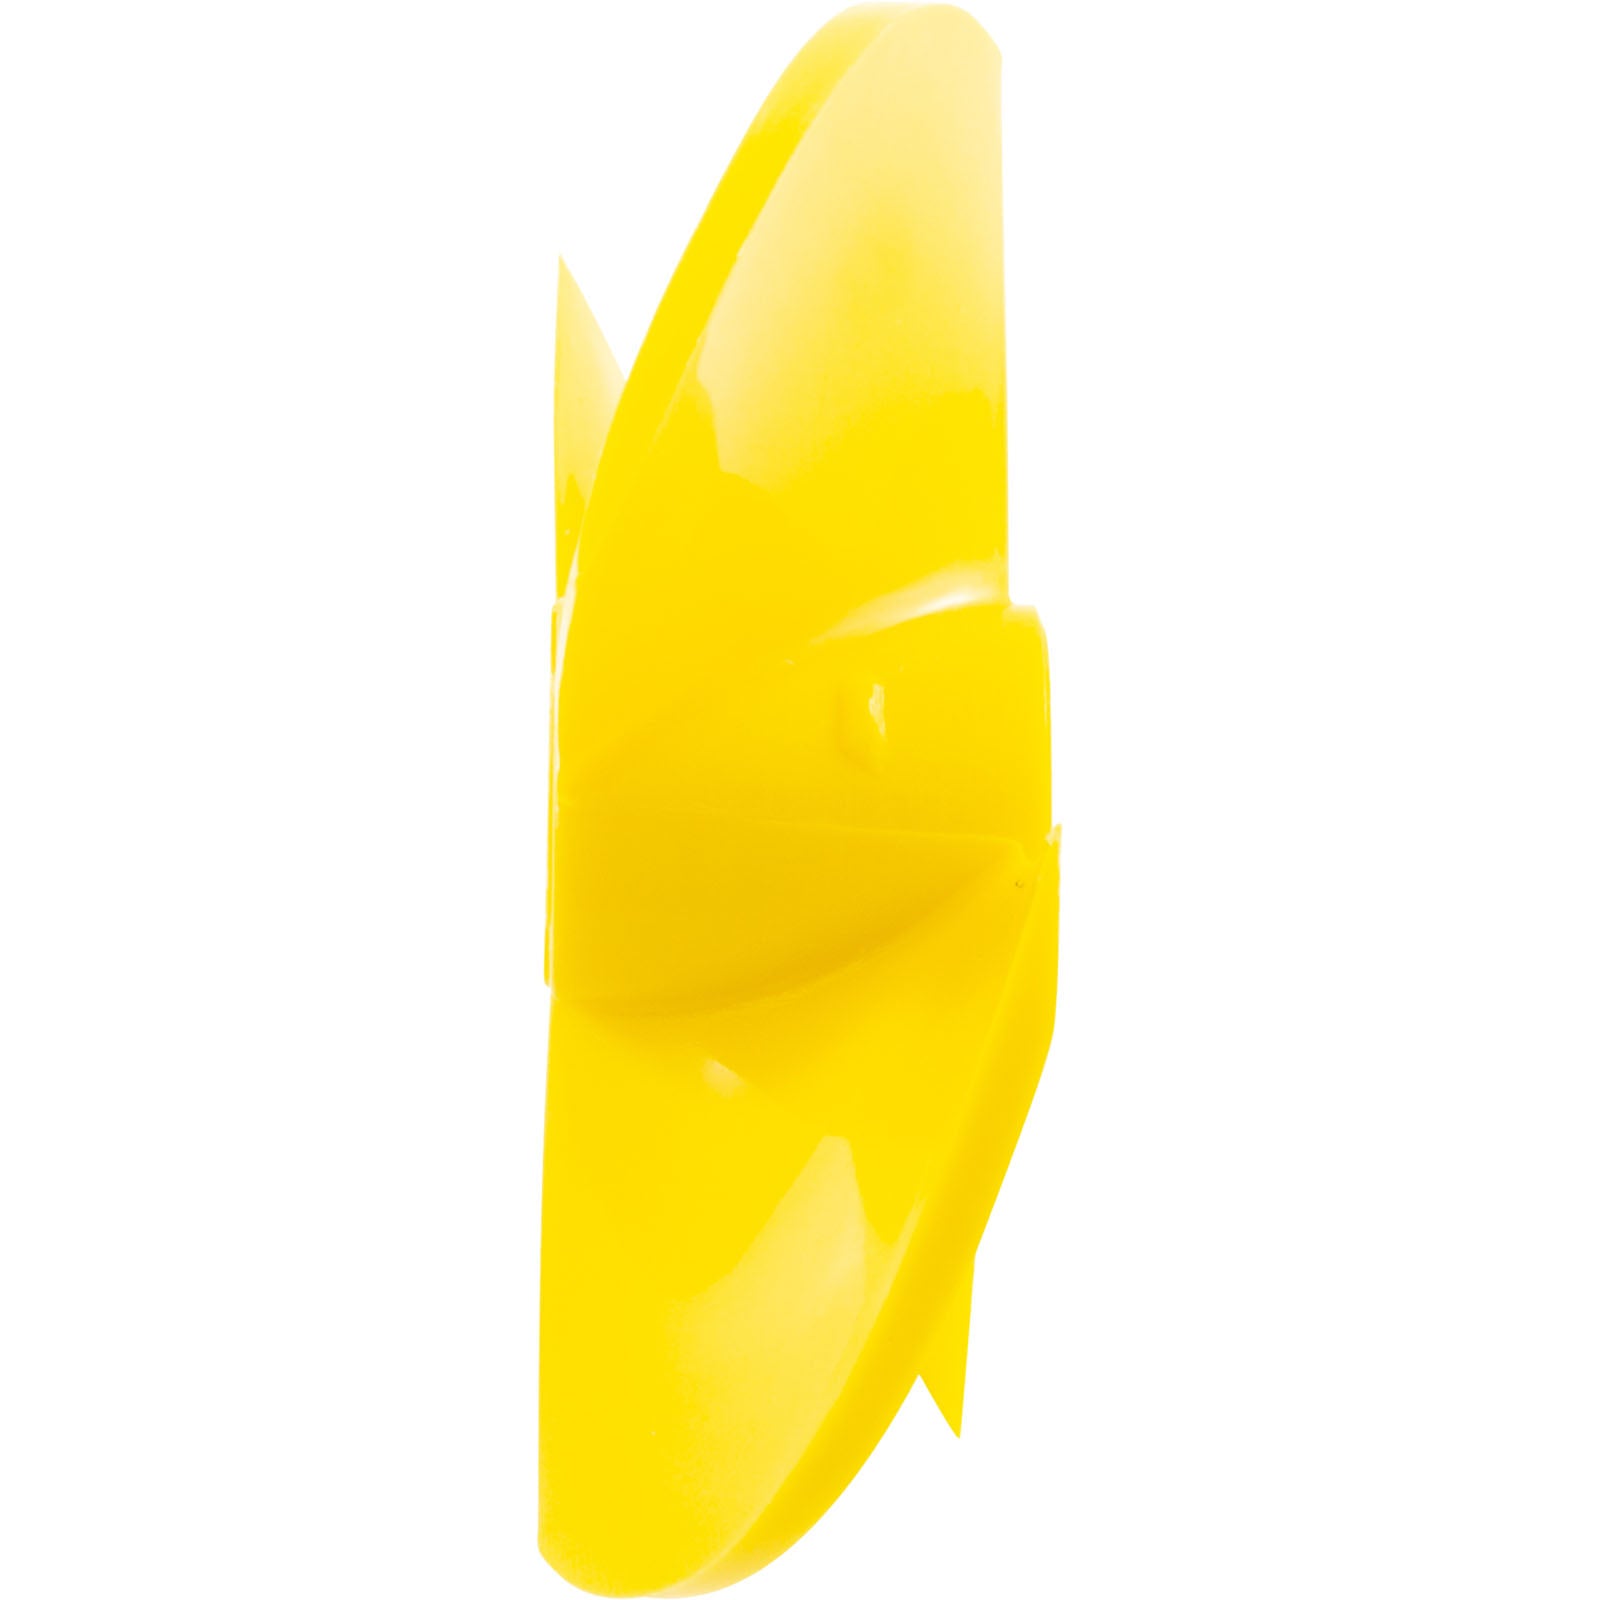 Impeller, Yellow, w/Screw, Quantity 1, Maytronics 9995269-R1